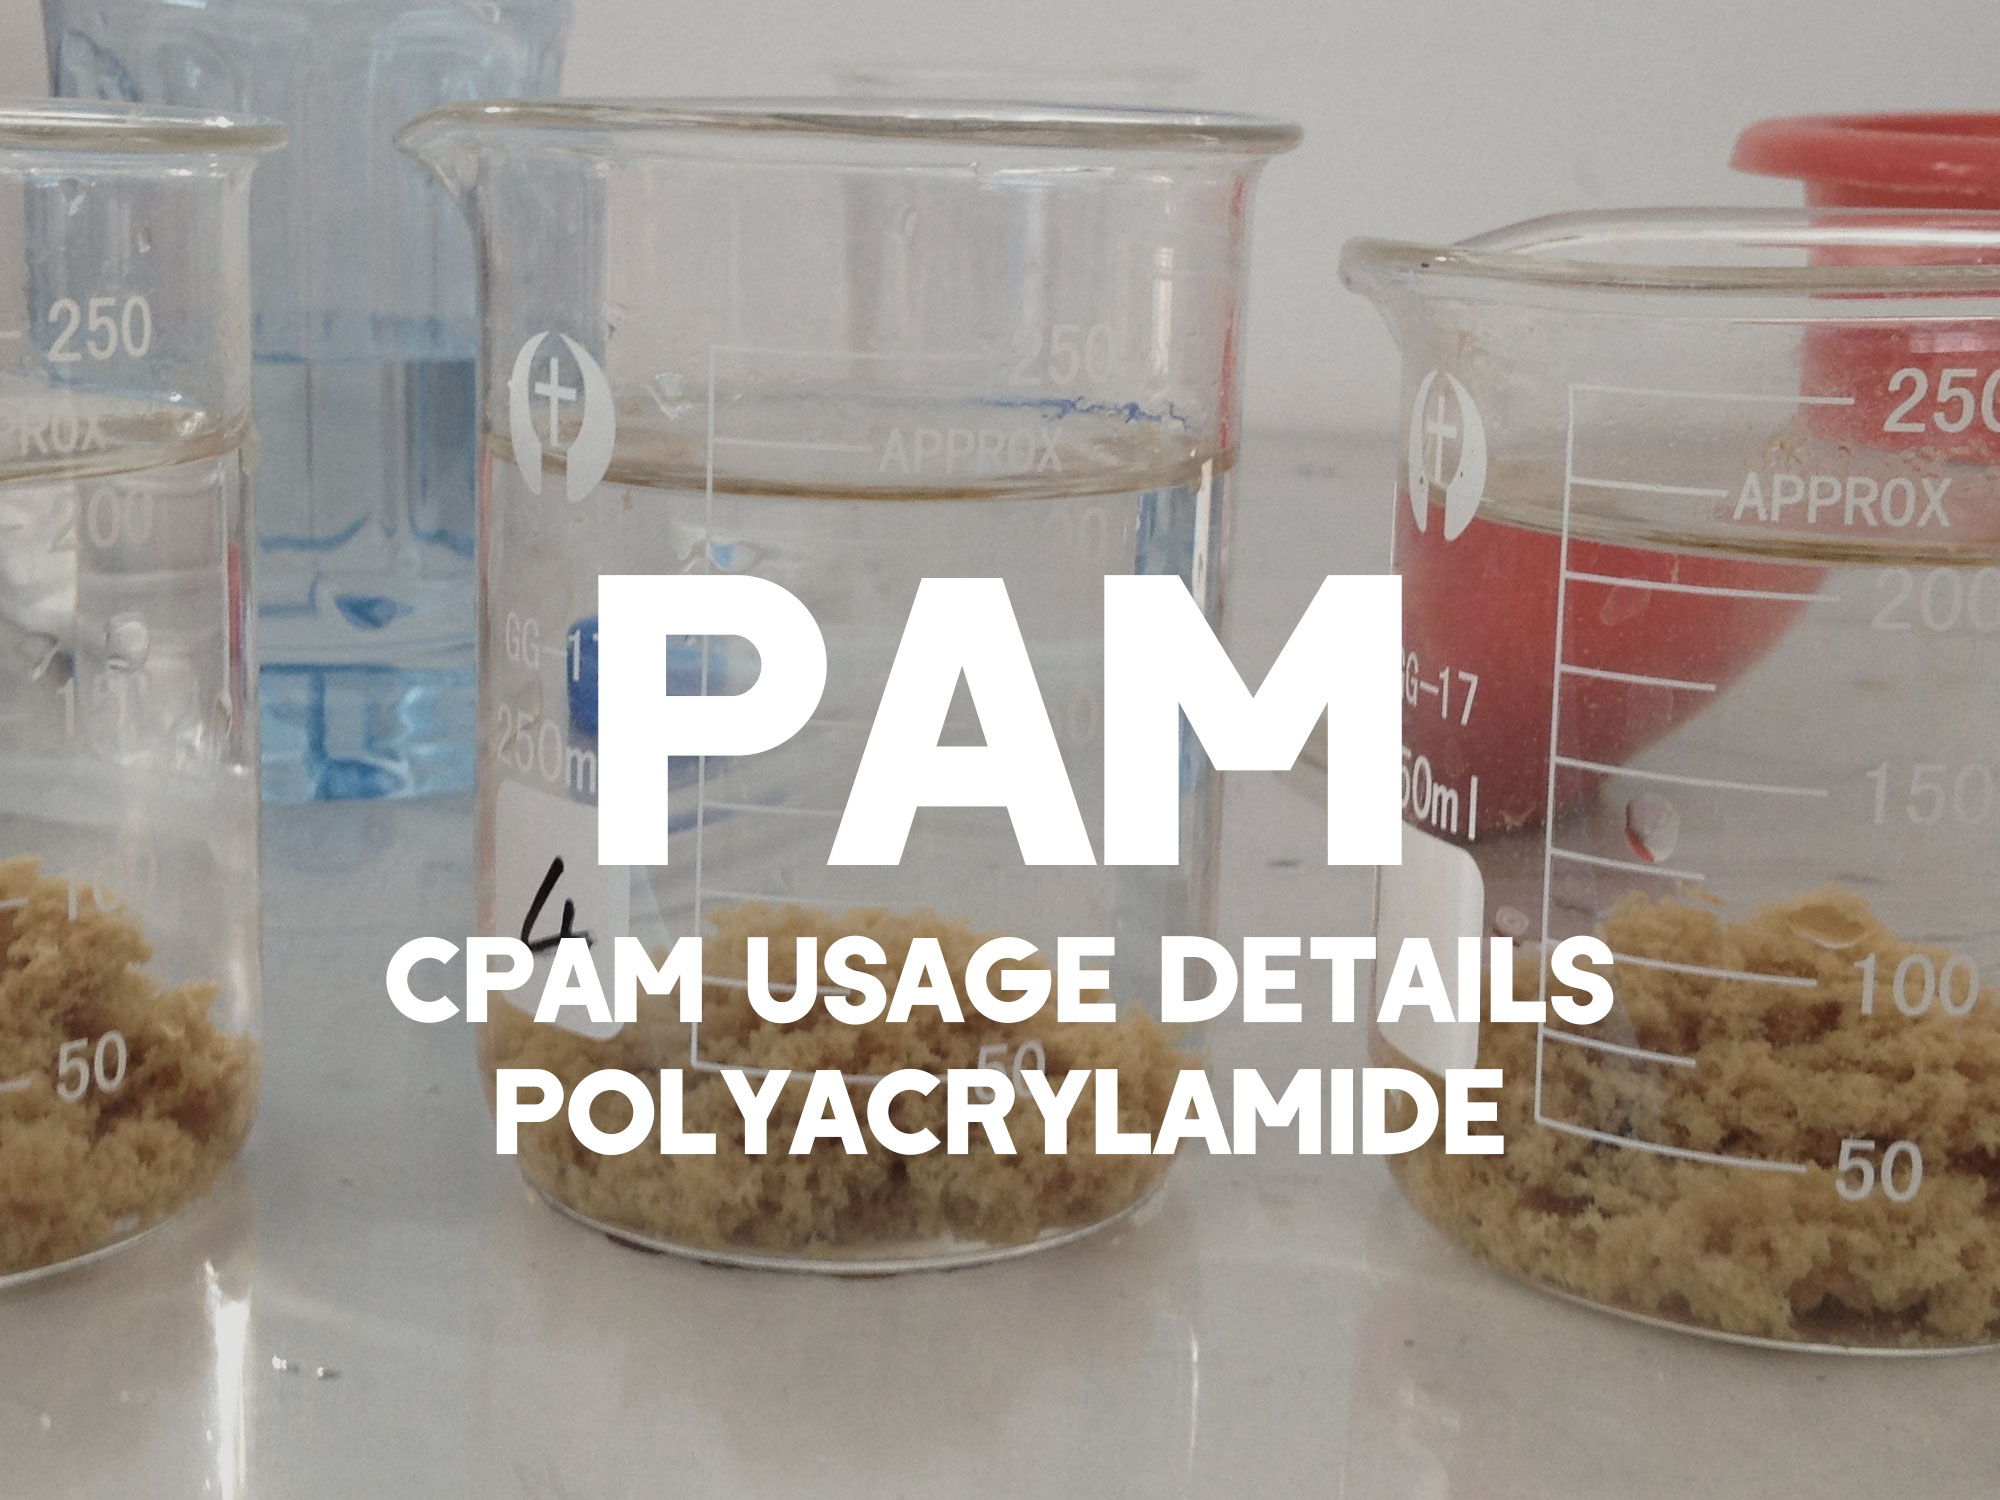 Rincian panggunaan Cation polyacrylamide